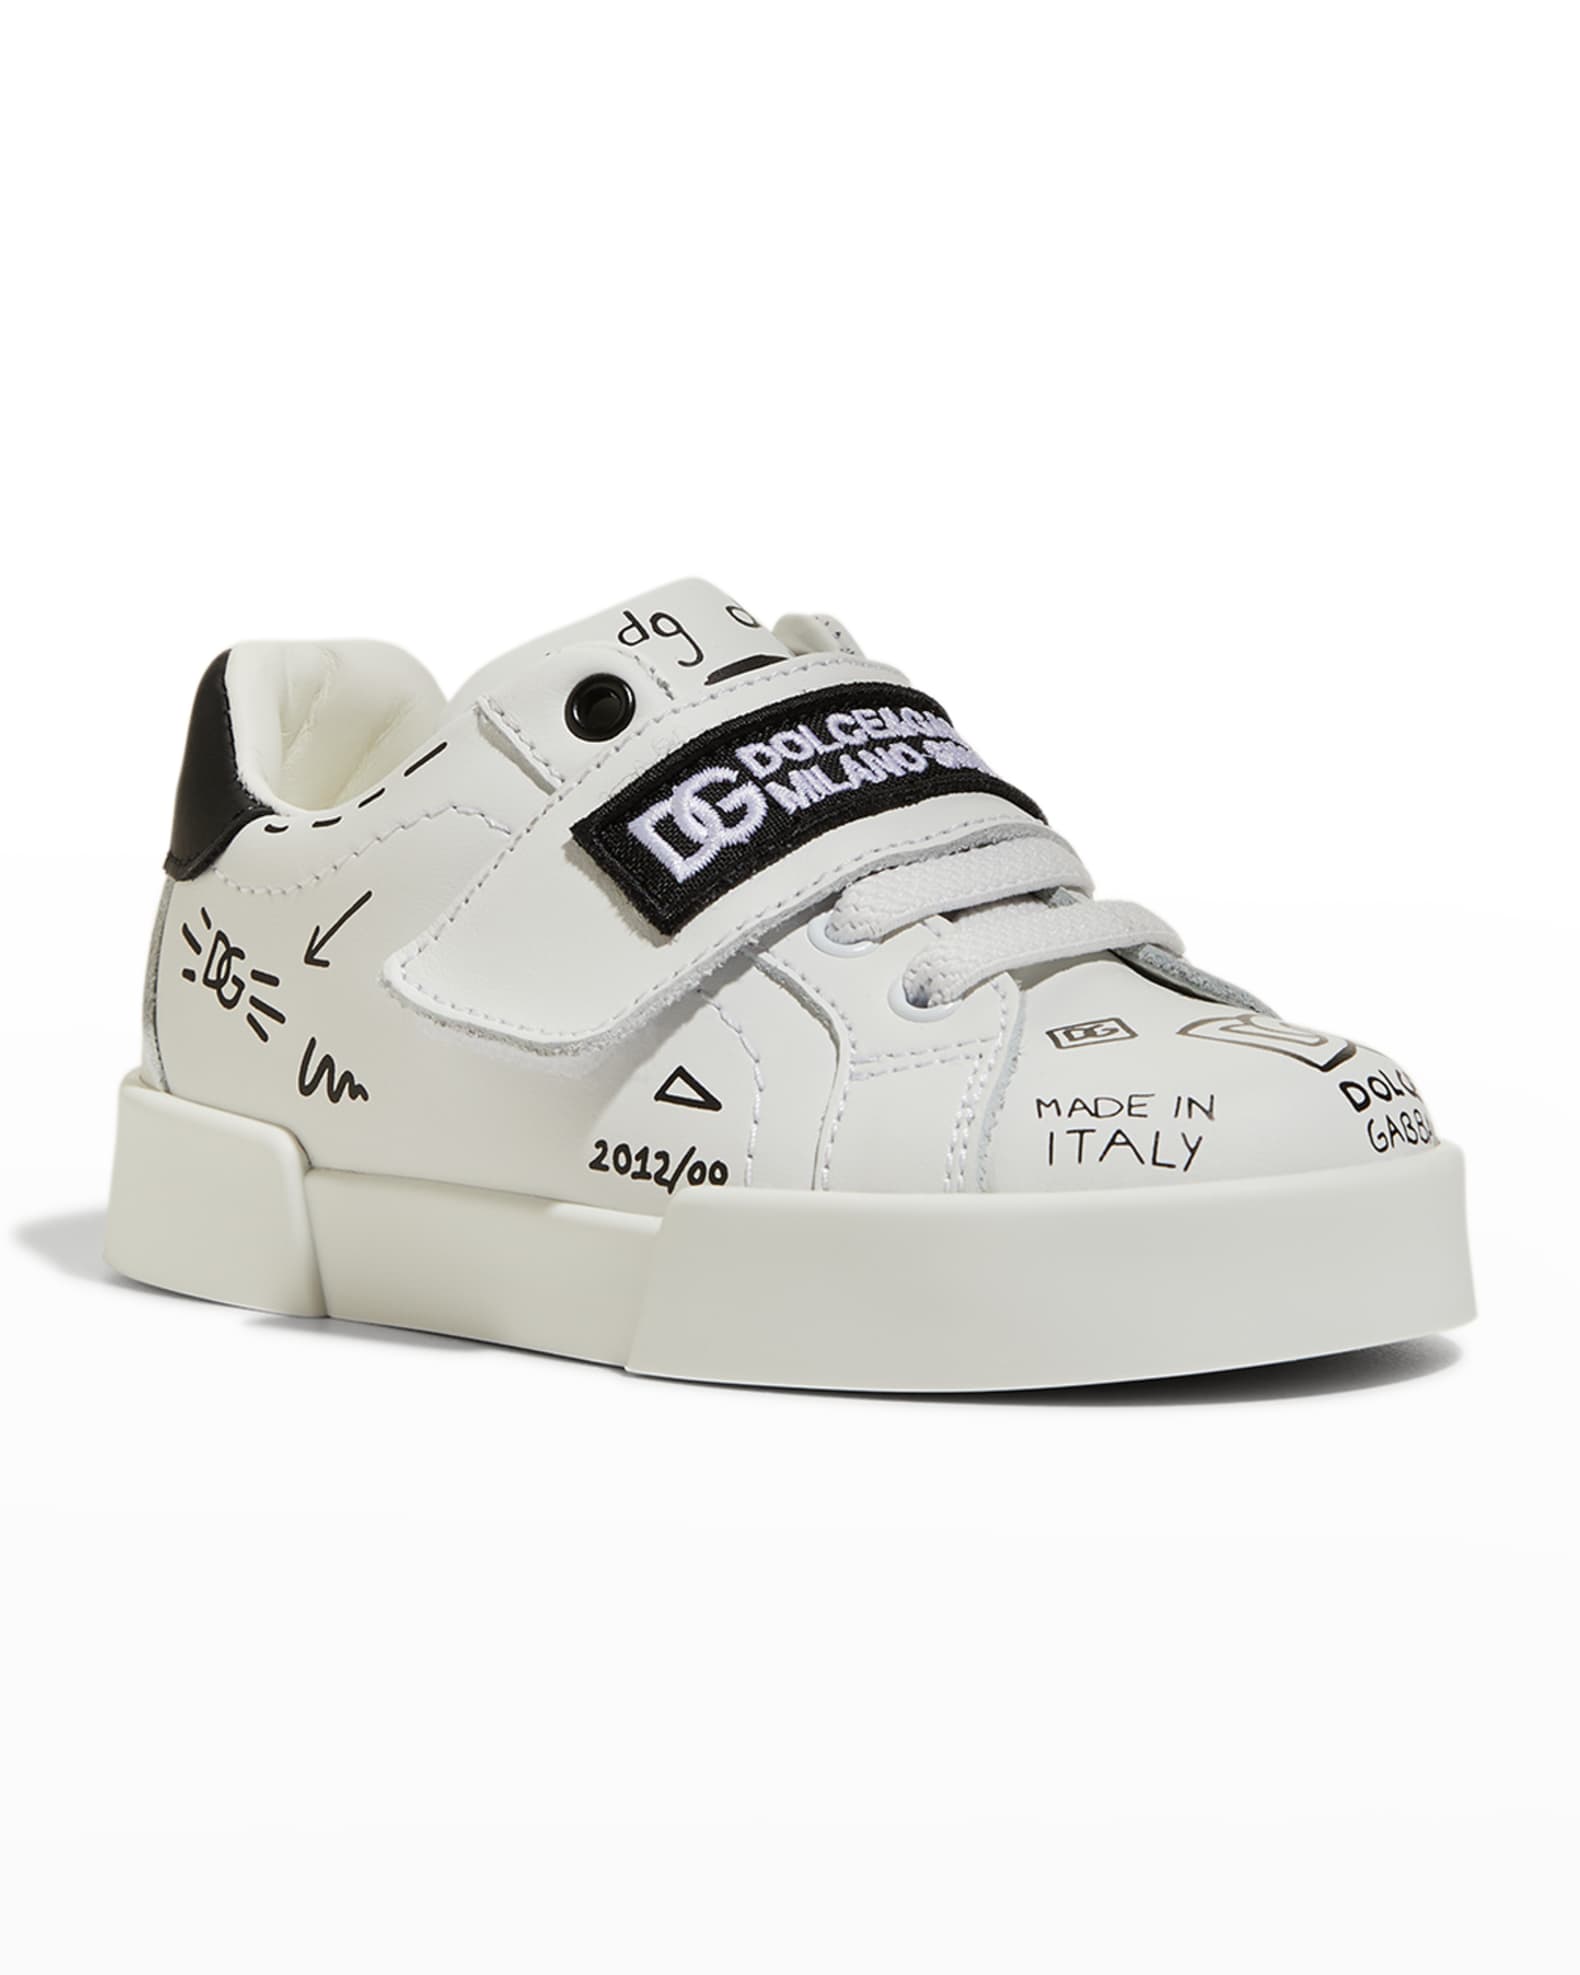 Dolce&Gabbana Kid's Graffiti Grip-Strap Sneakers, Toddler | Neiman Marcus